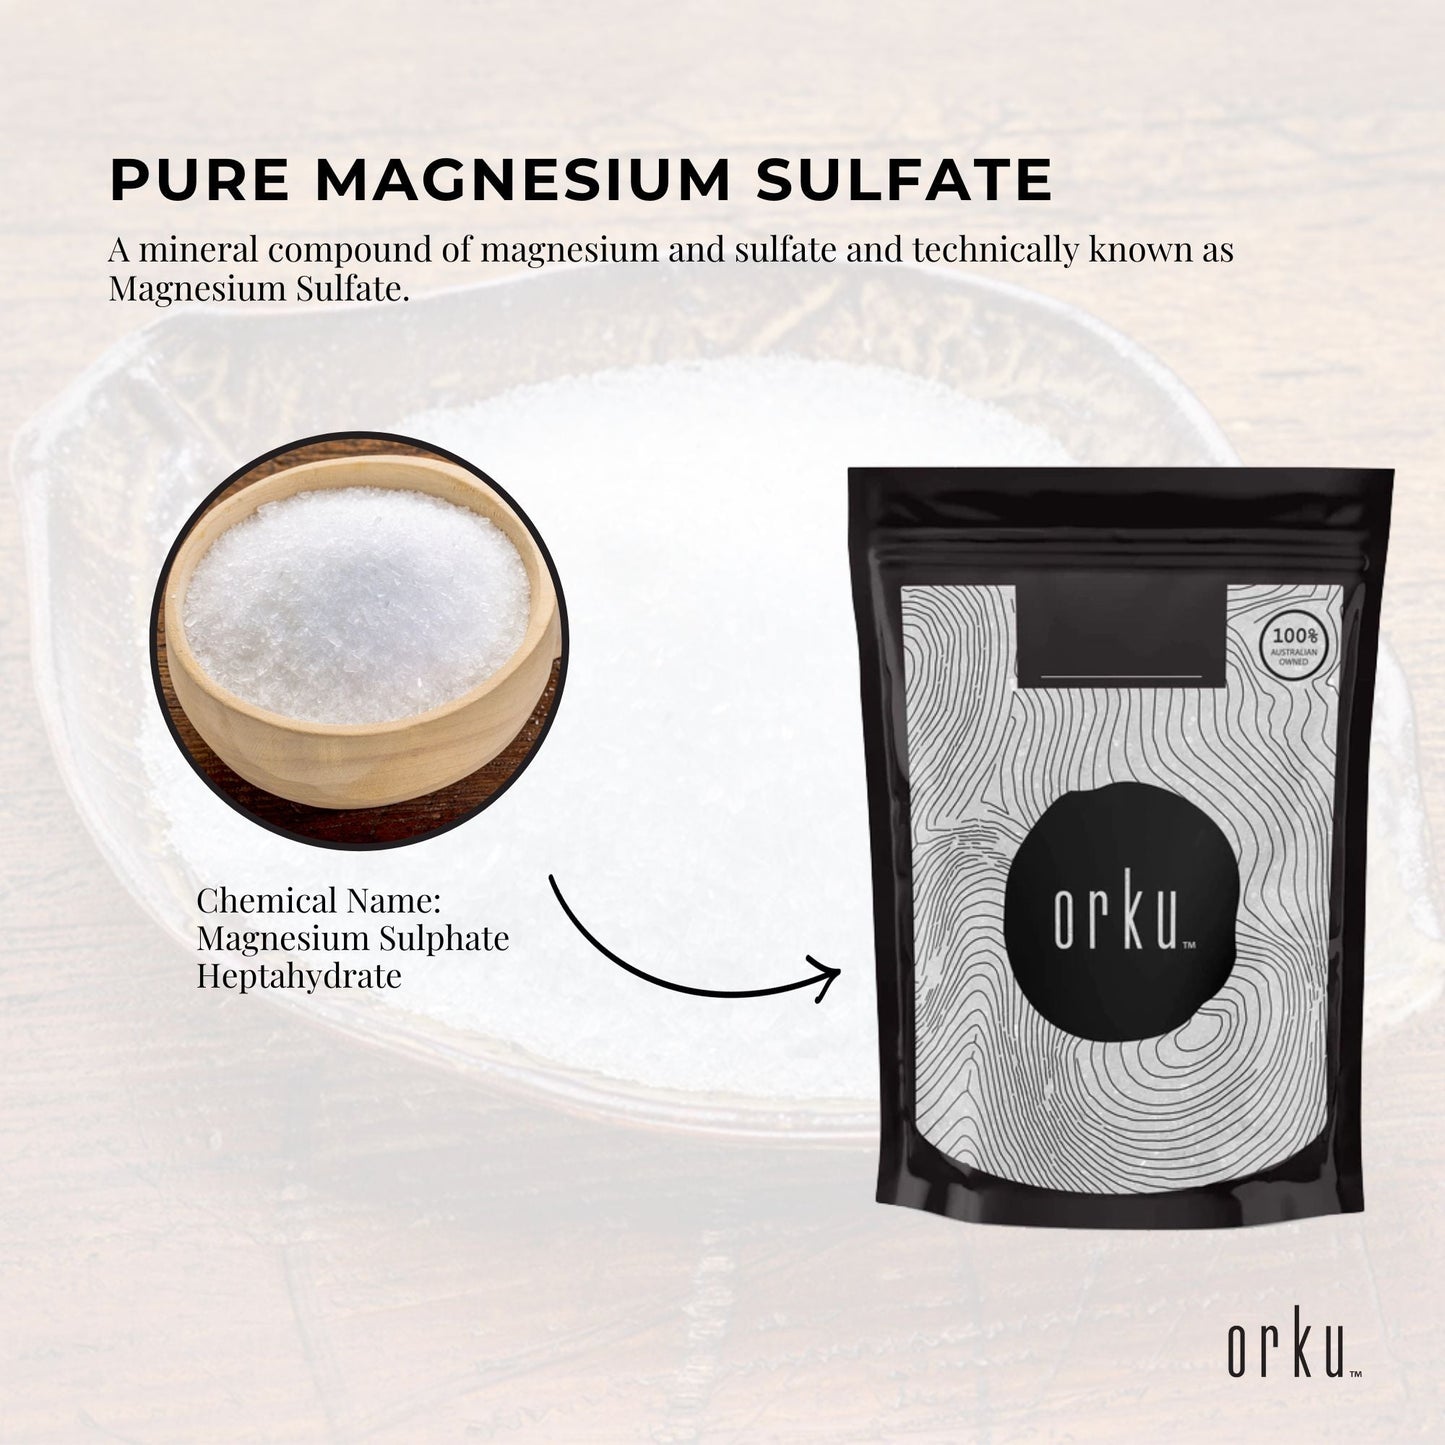 12x 1Kg Orku Epsom Salt - Magnesium Sulphate Bath Salts Skin Body